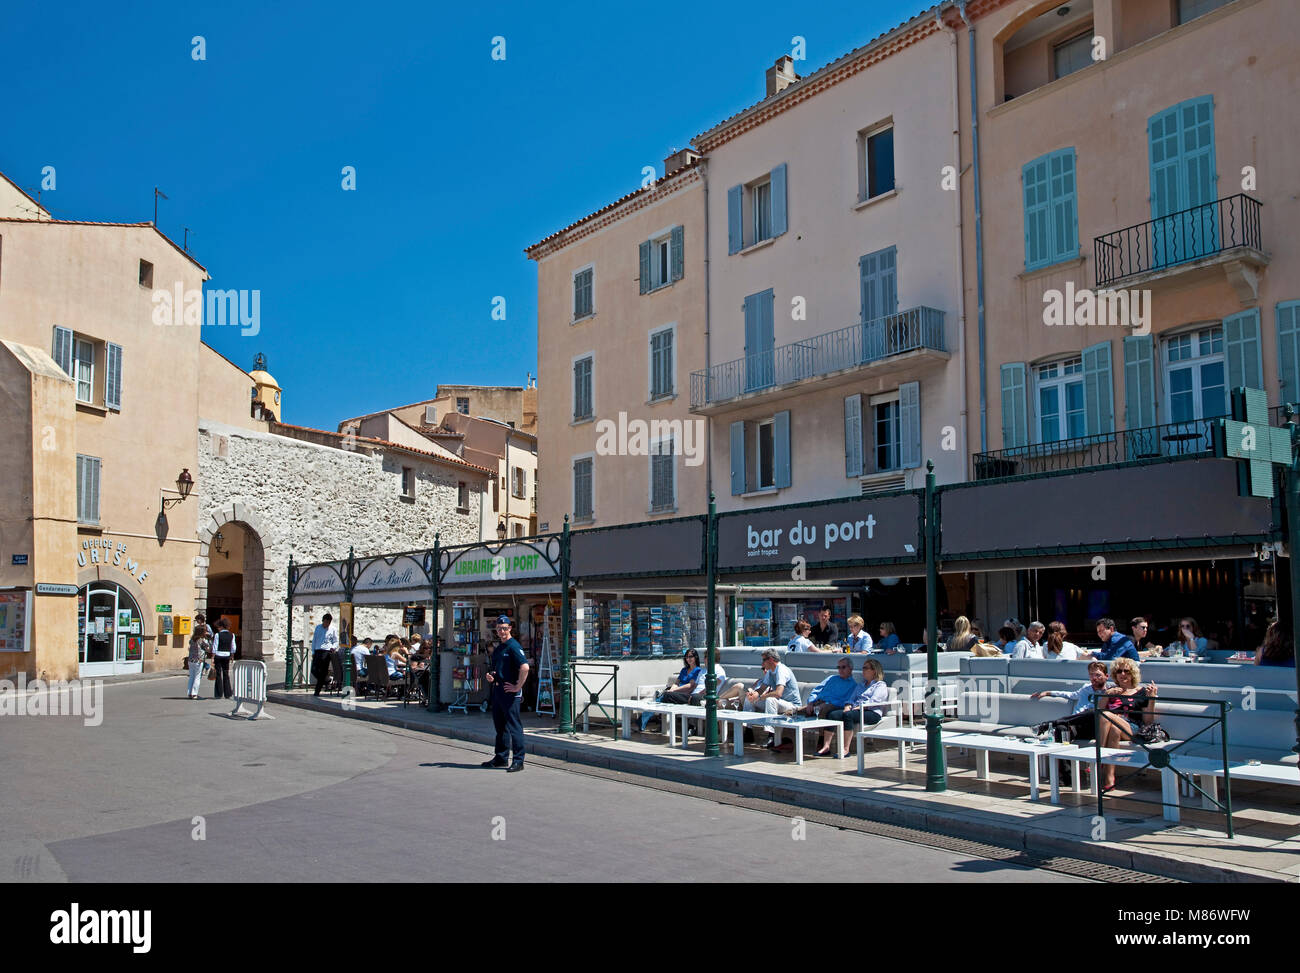 Harbour bar "Bar du port" at harbour of Saint-Tropez, french riviera, South  France, Cote d'Azur, France, Europe Stock Photo - Alamy